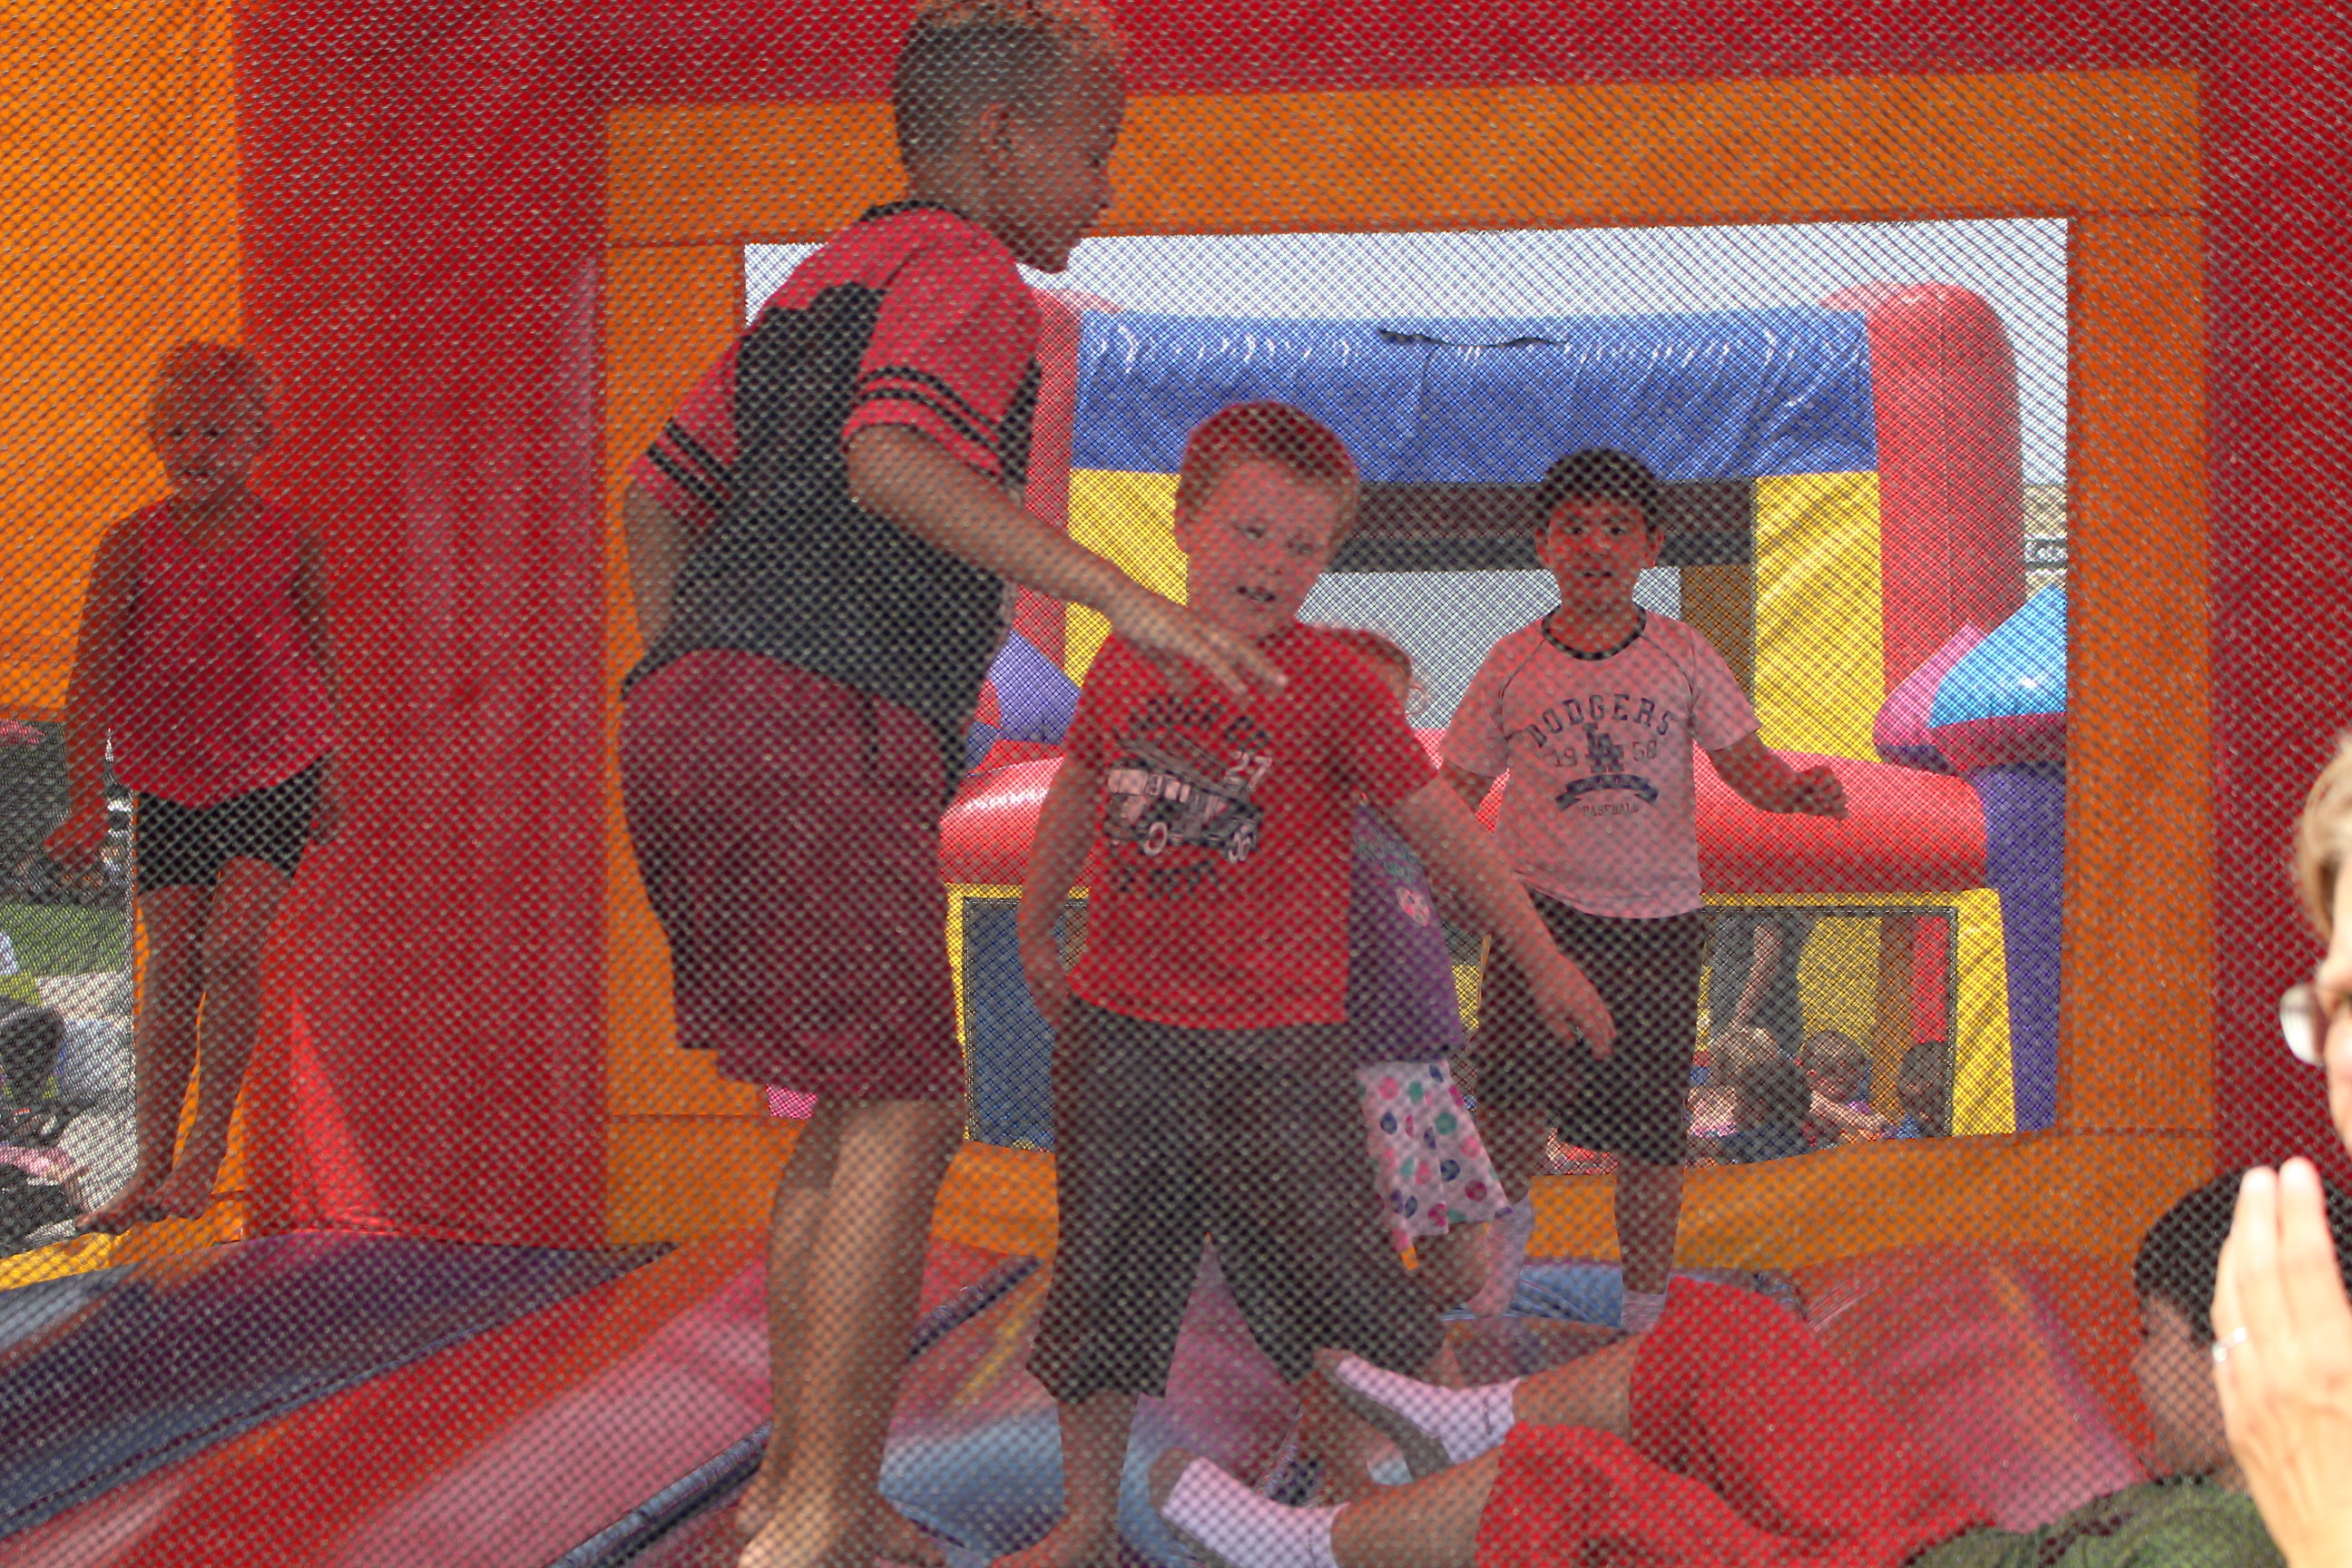 Kids inside bouncy house